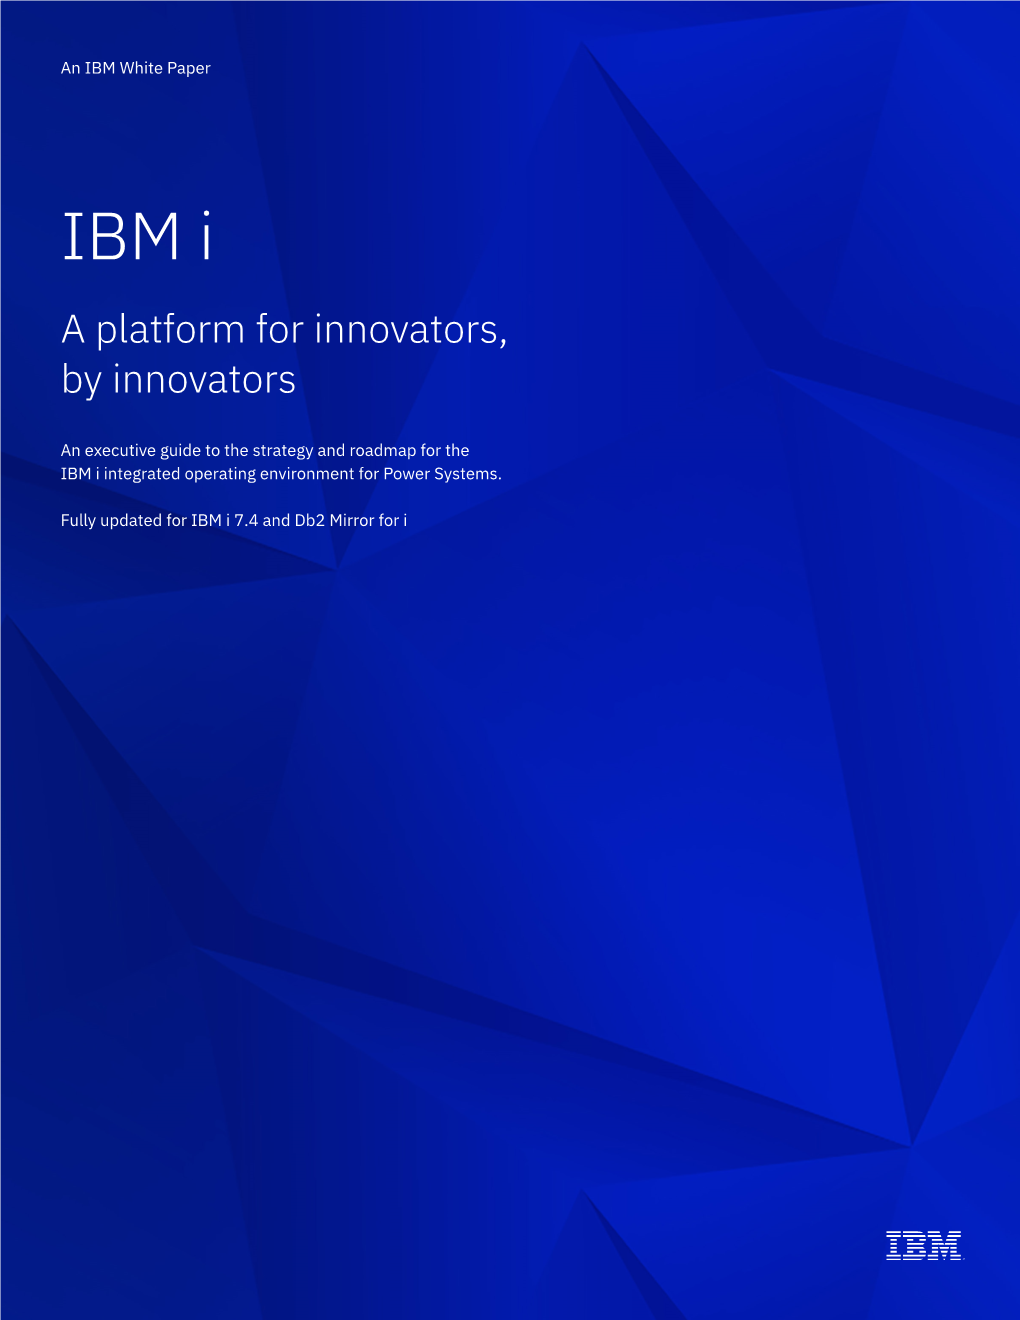 IBM I a Platform for Innovators, by Innovators